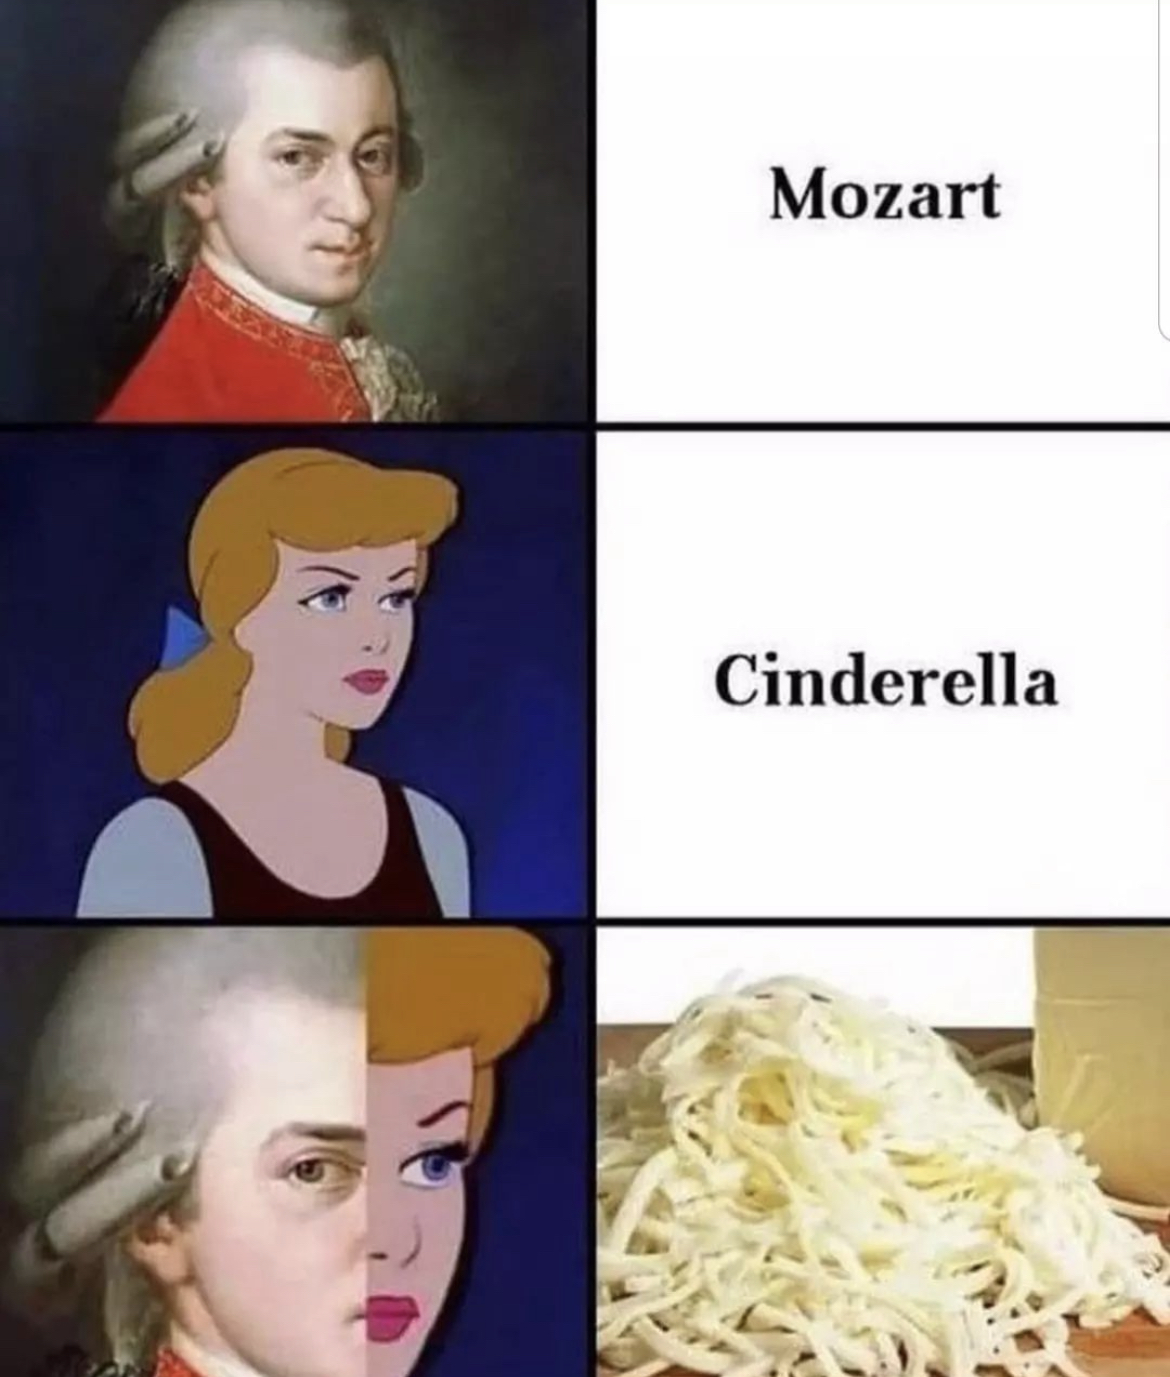 dank memes - funny memes - cinderella mozart - Mozart Cinderella